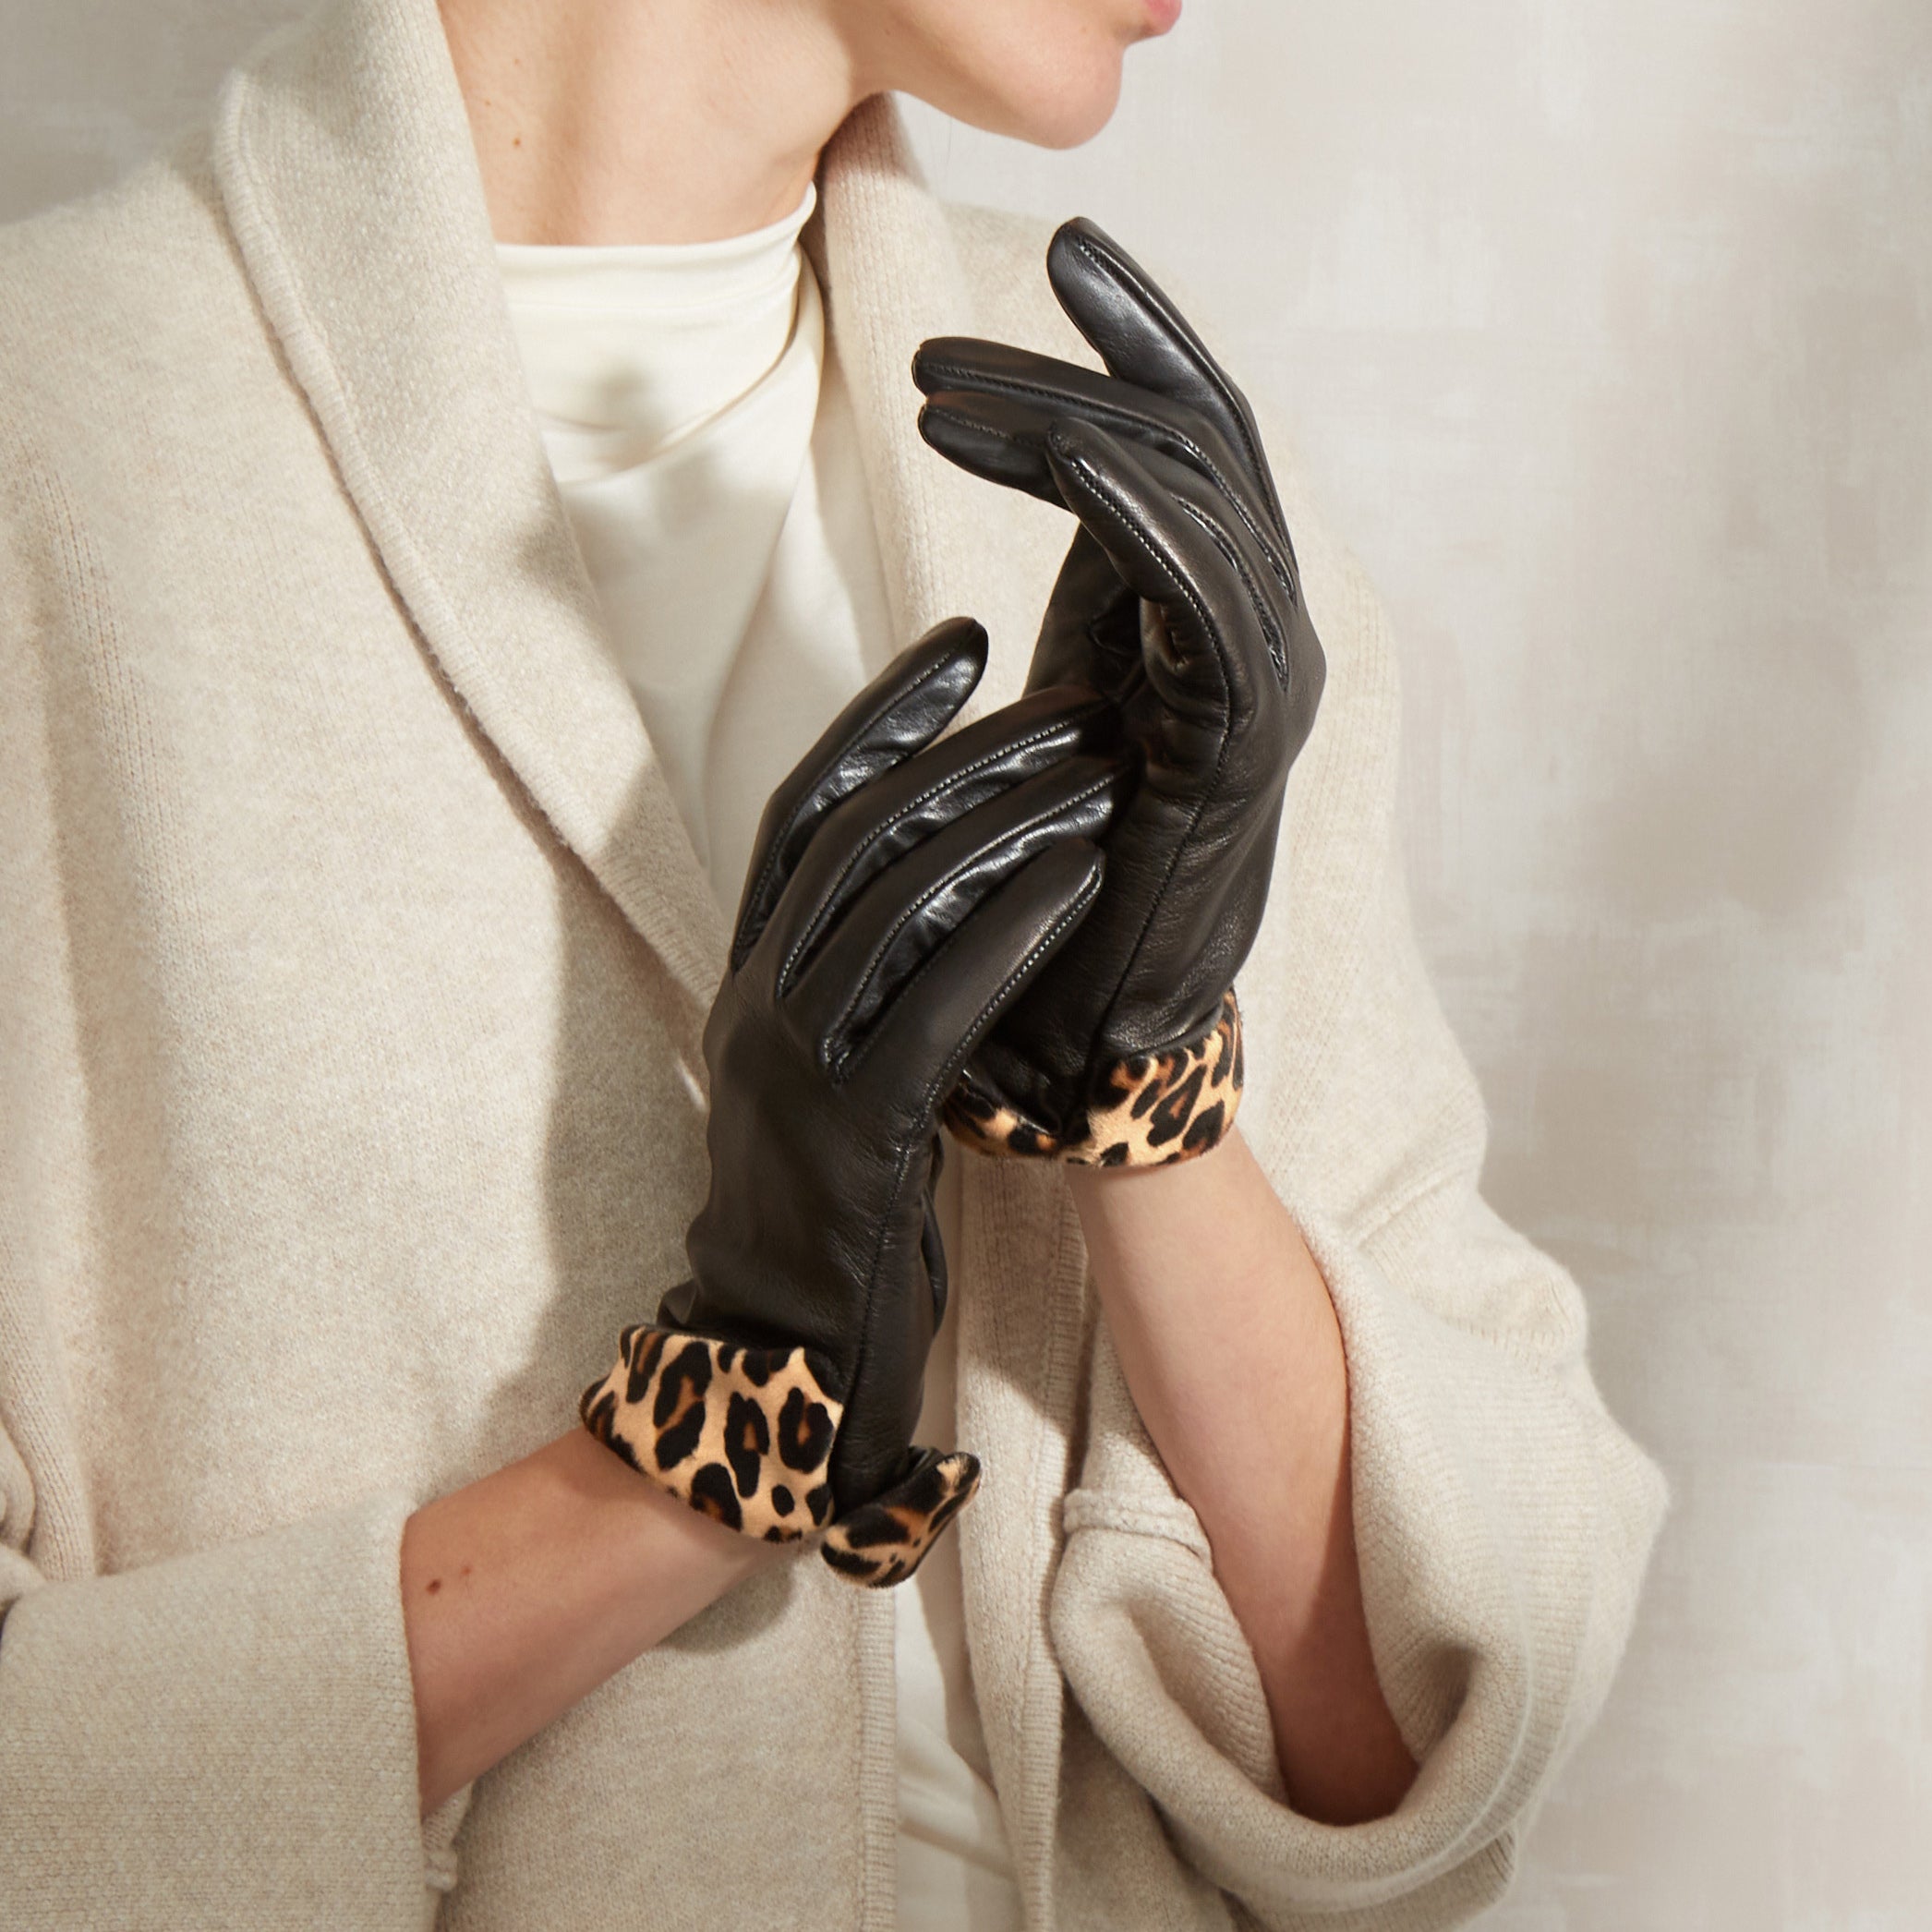 Cornelia James - Black Leather Gloves with Silk Lining - Natalie - Size Large (8½) - Handmade Leather Gloves by Cornelia James